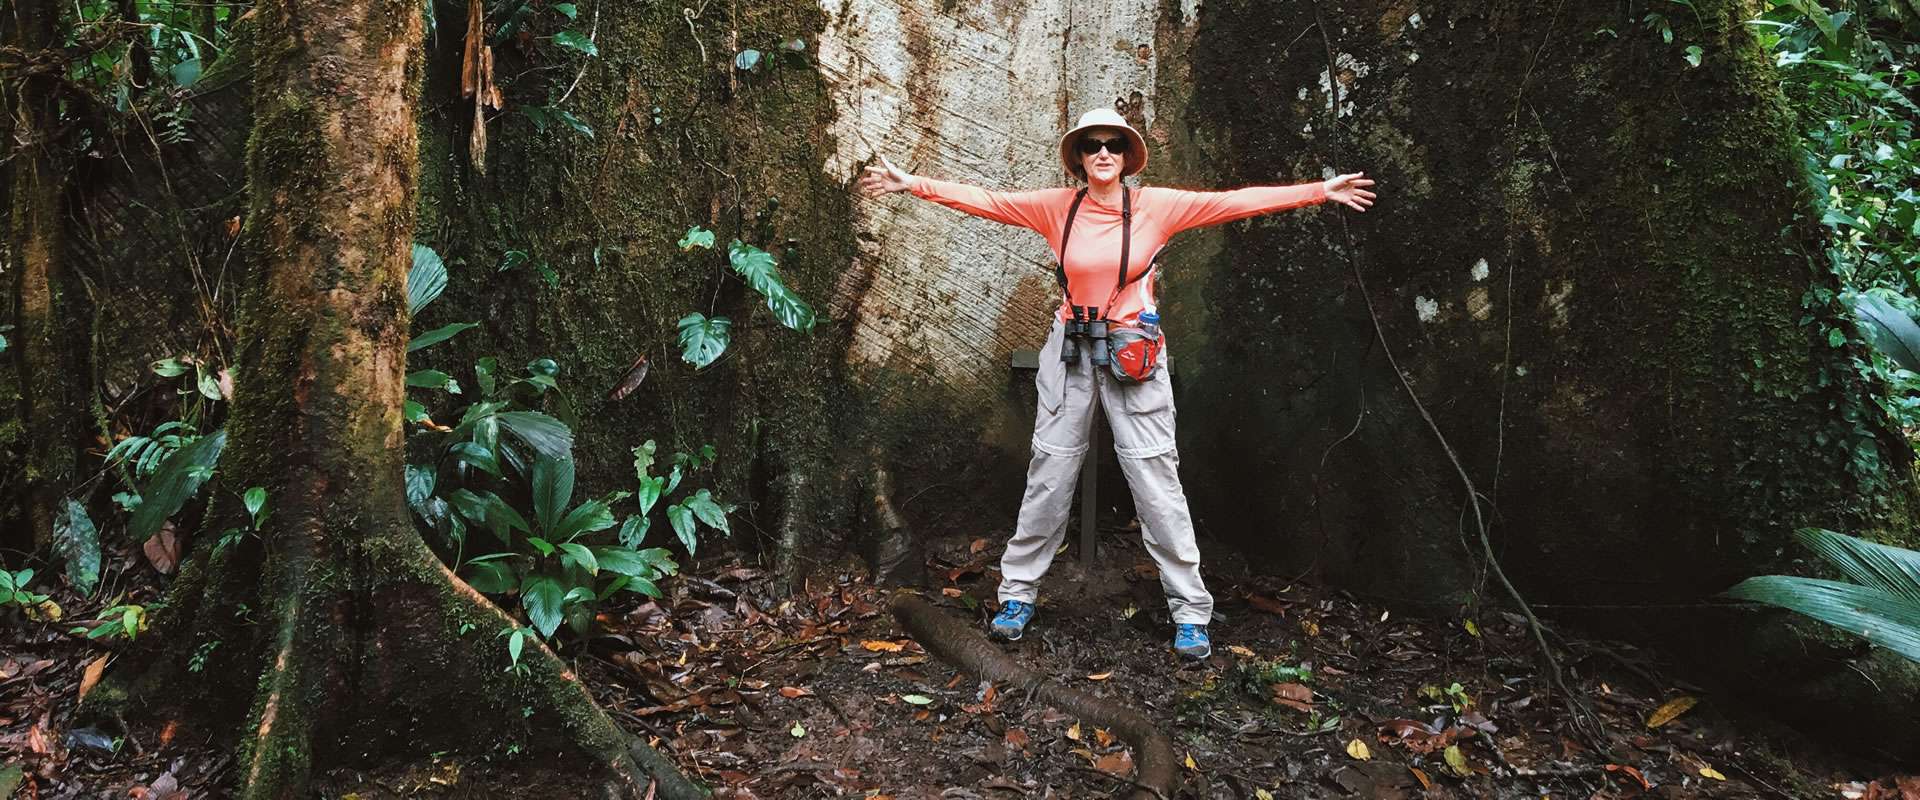 Tour de bosque Lluvioso Caribe Costa Rica  | Costa Rica Jade Tours